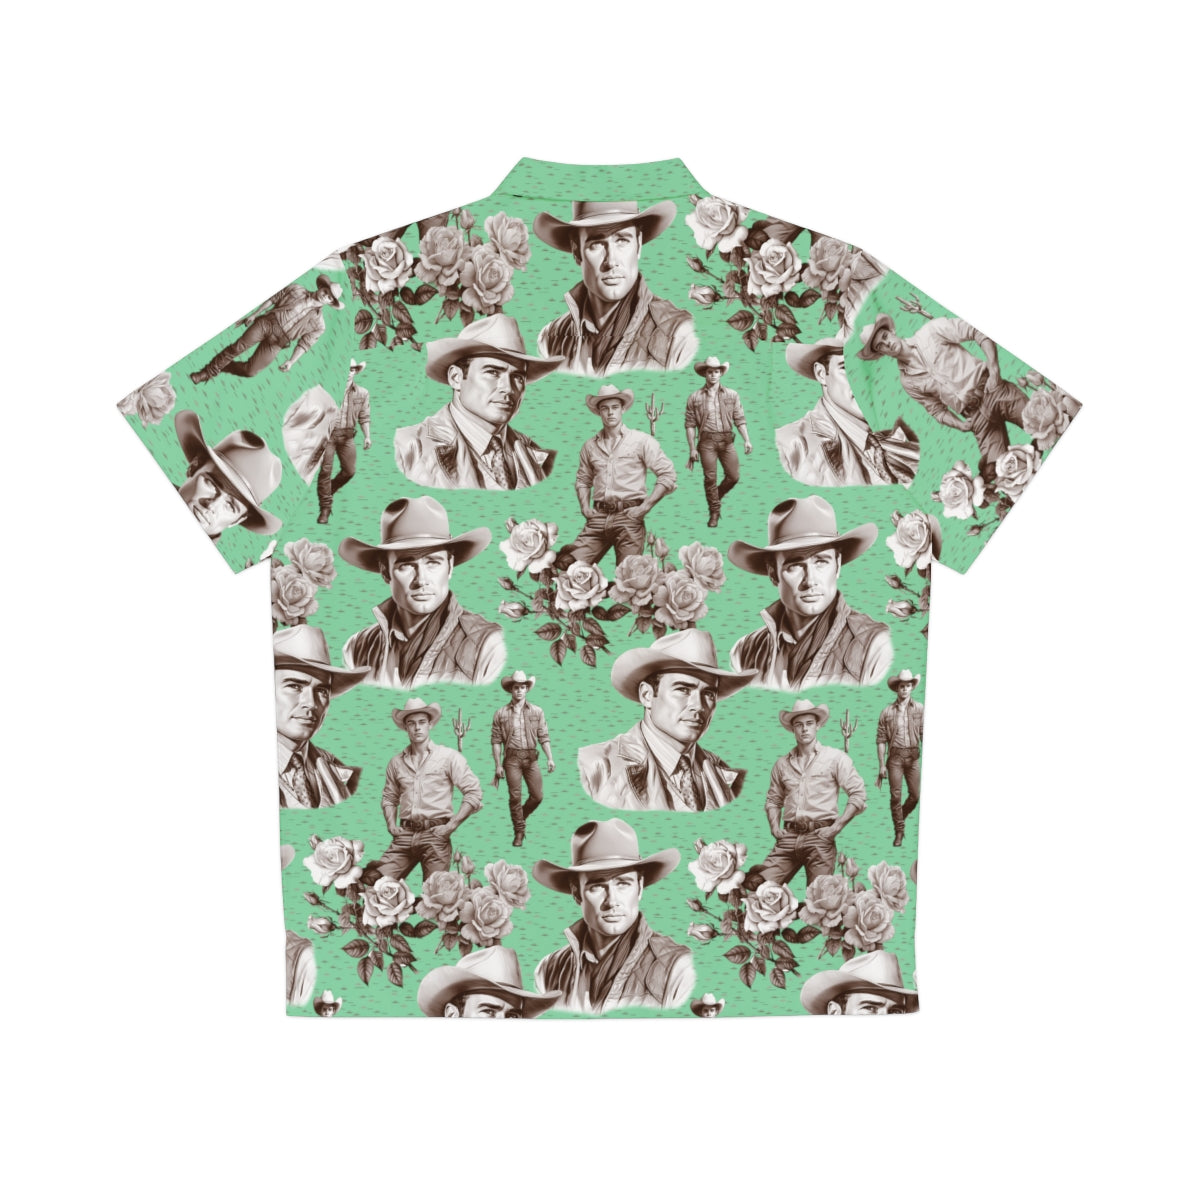 Handsome Cowboys Toile (Jade) Aloha Shirt by Studio Ten Design